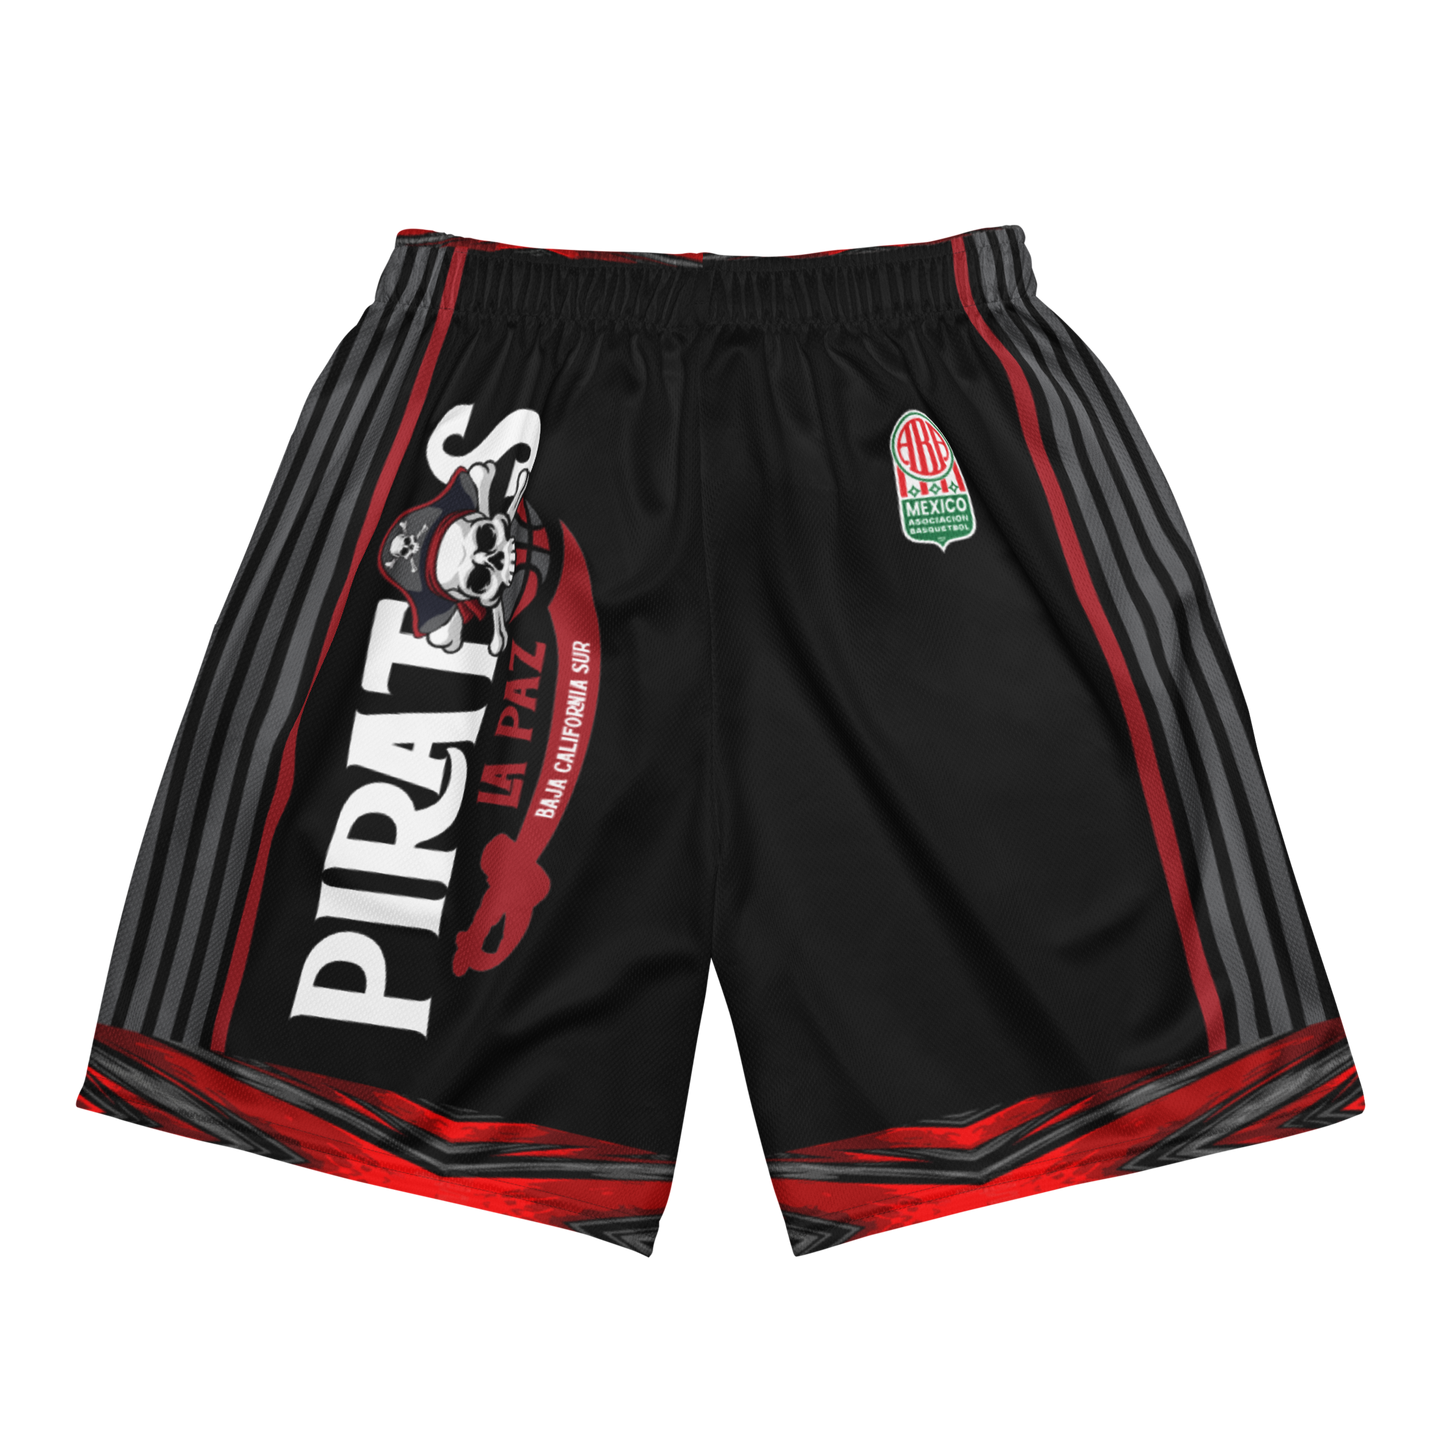 The La Paz Piratas Basketball Team's Black Team Shorts